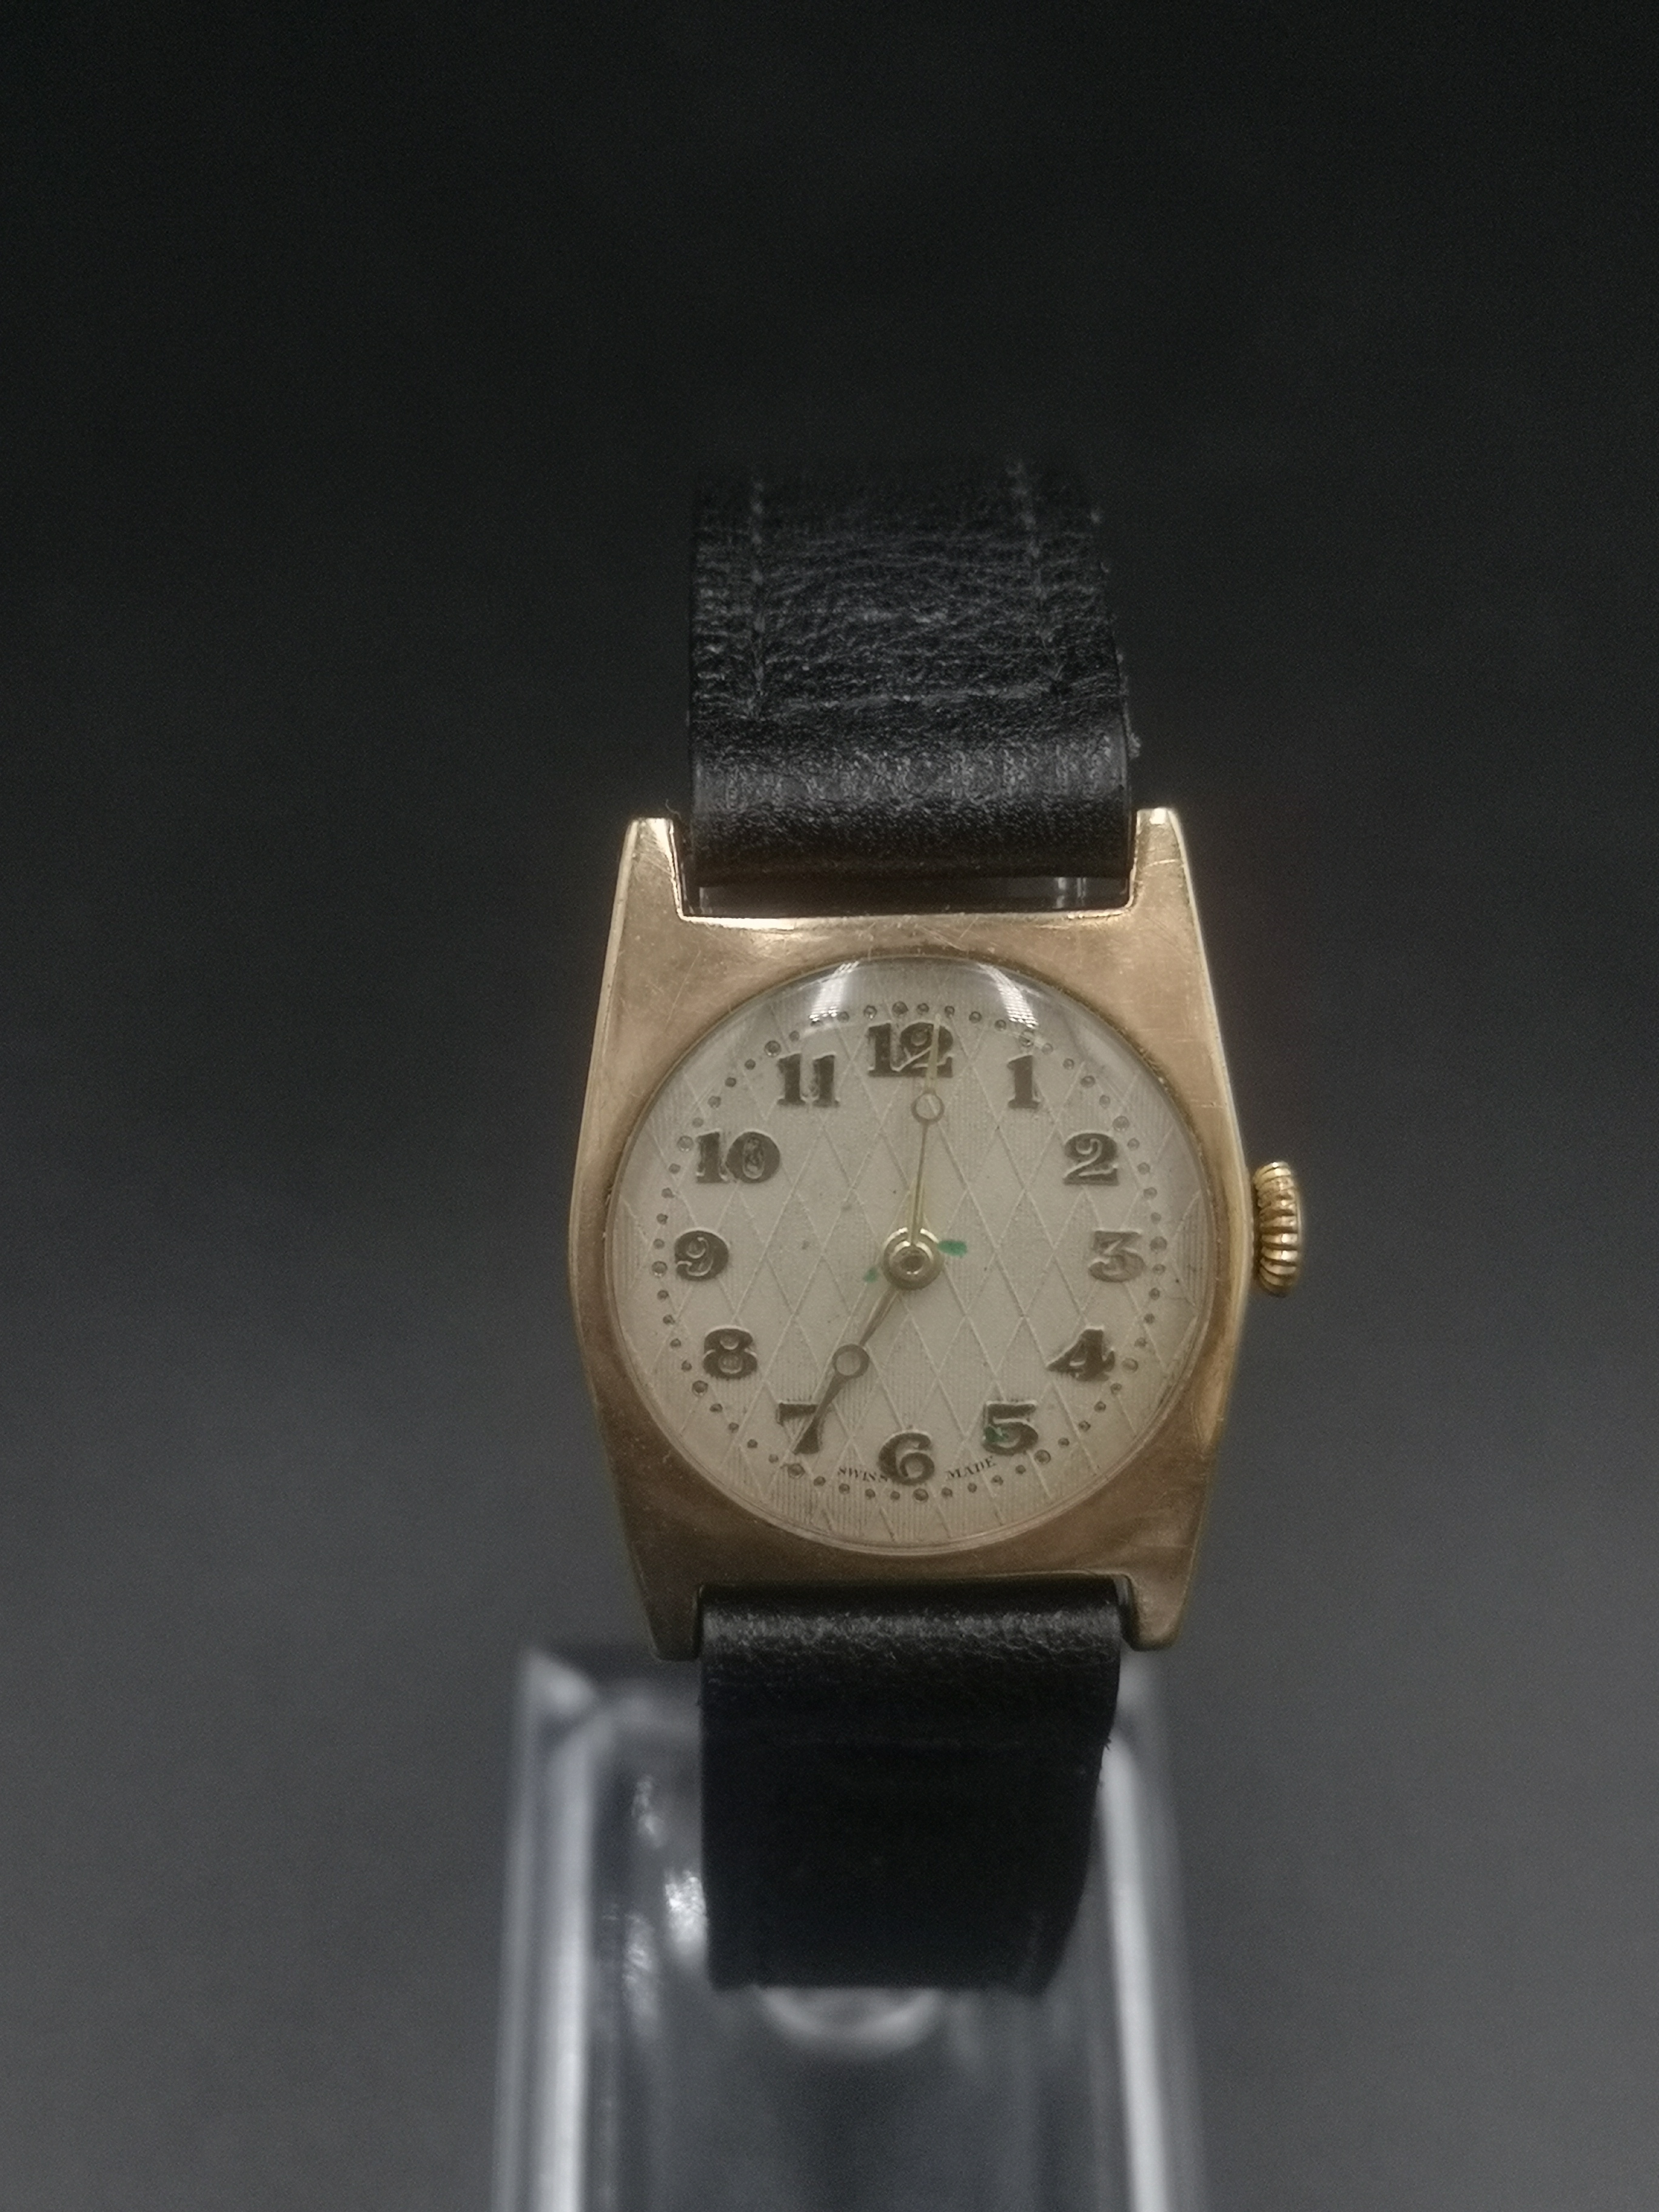 Manual wind wrist watch in 9ct gold case